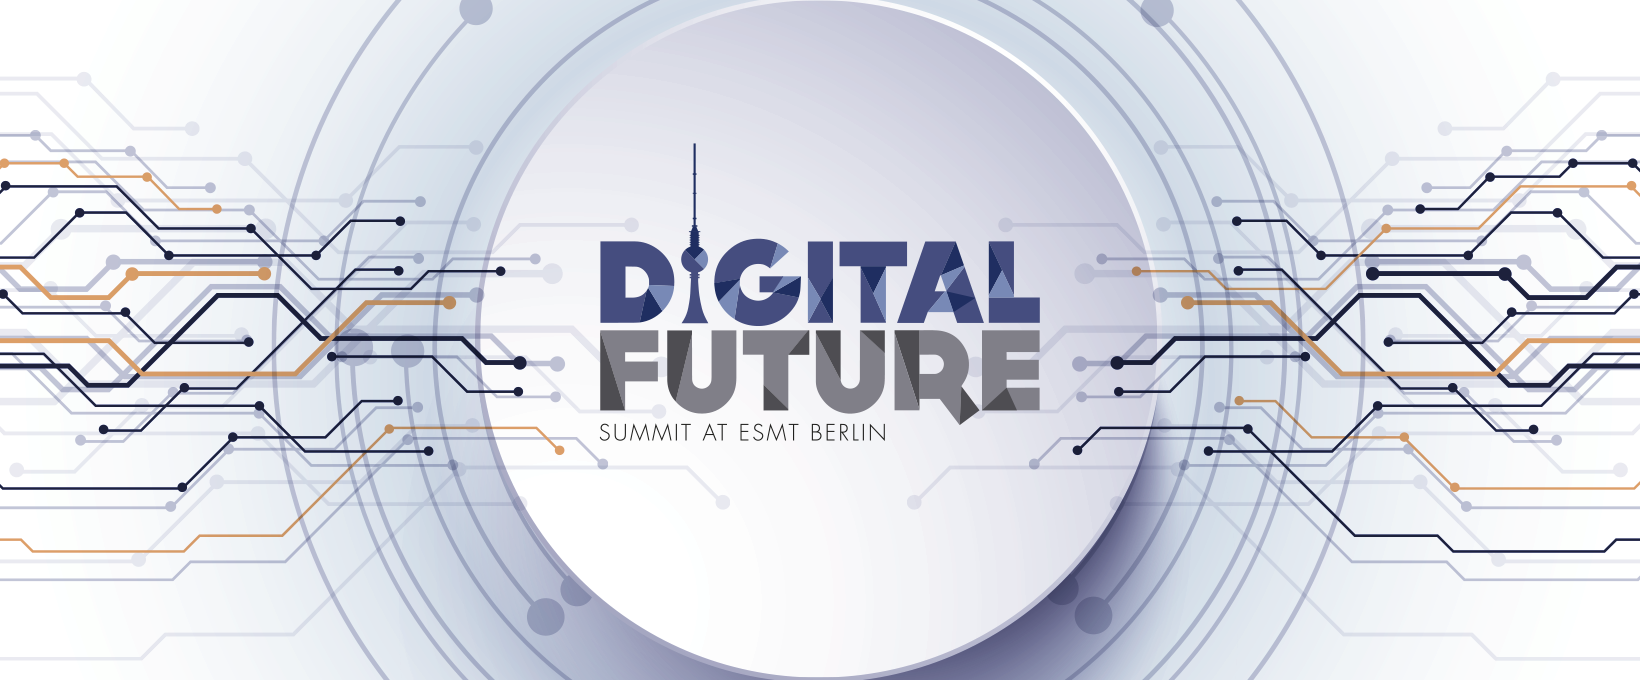 Digital Future banner